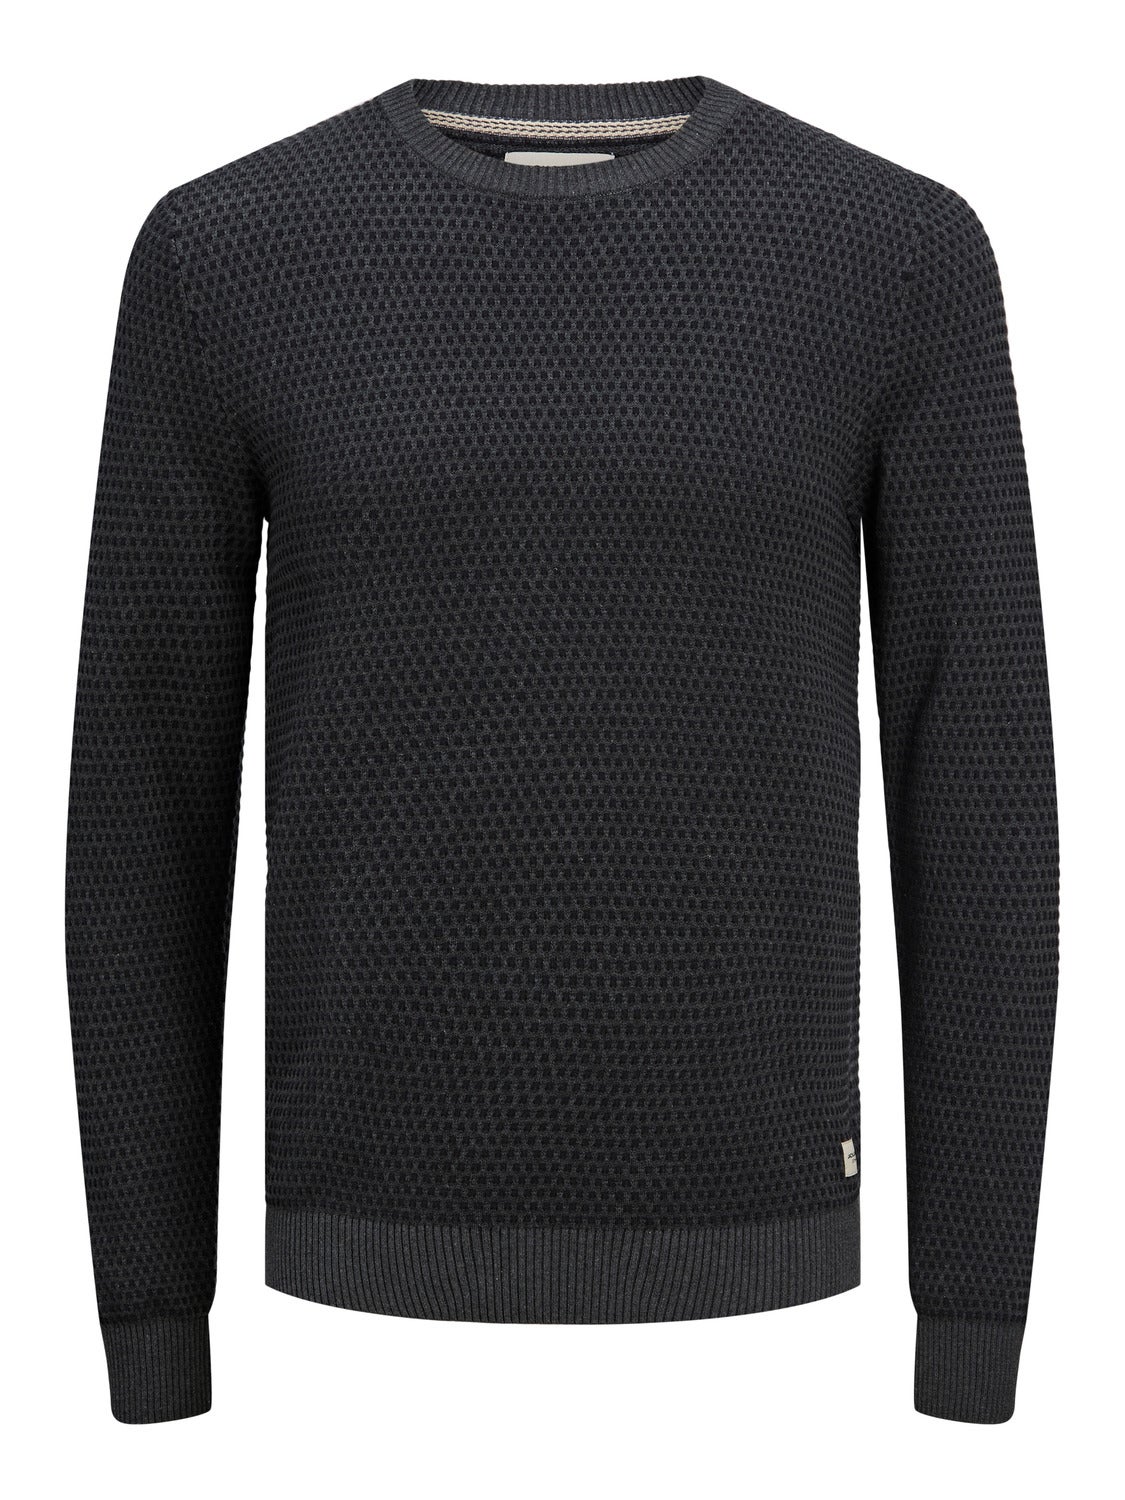 Louis Vuitton Damier Spread Printed Sweatshirt